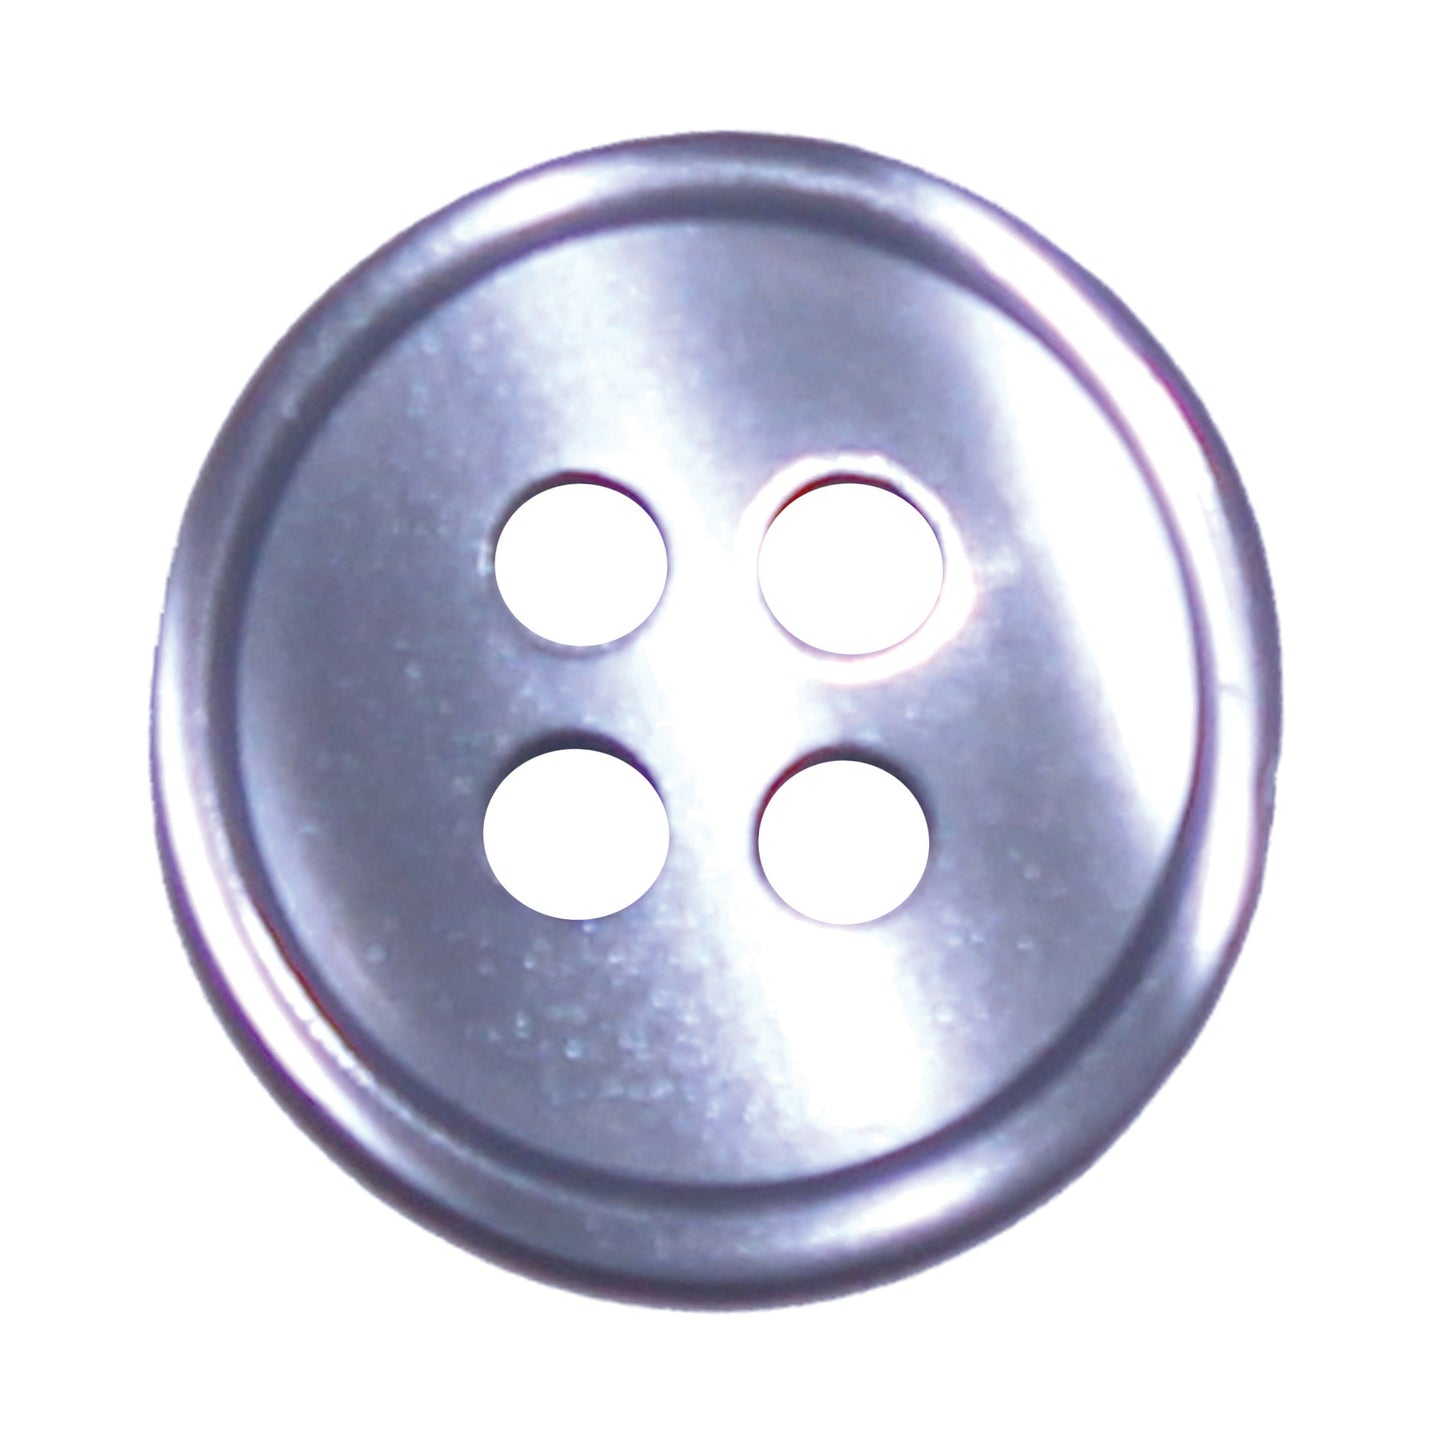 4 Hole Button - 13mm - Blue-Grey [LD33.5]